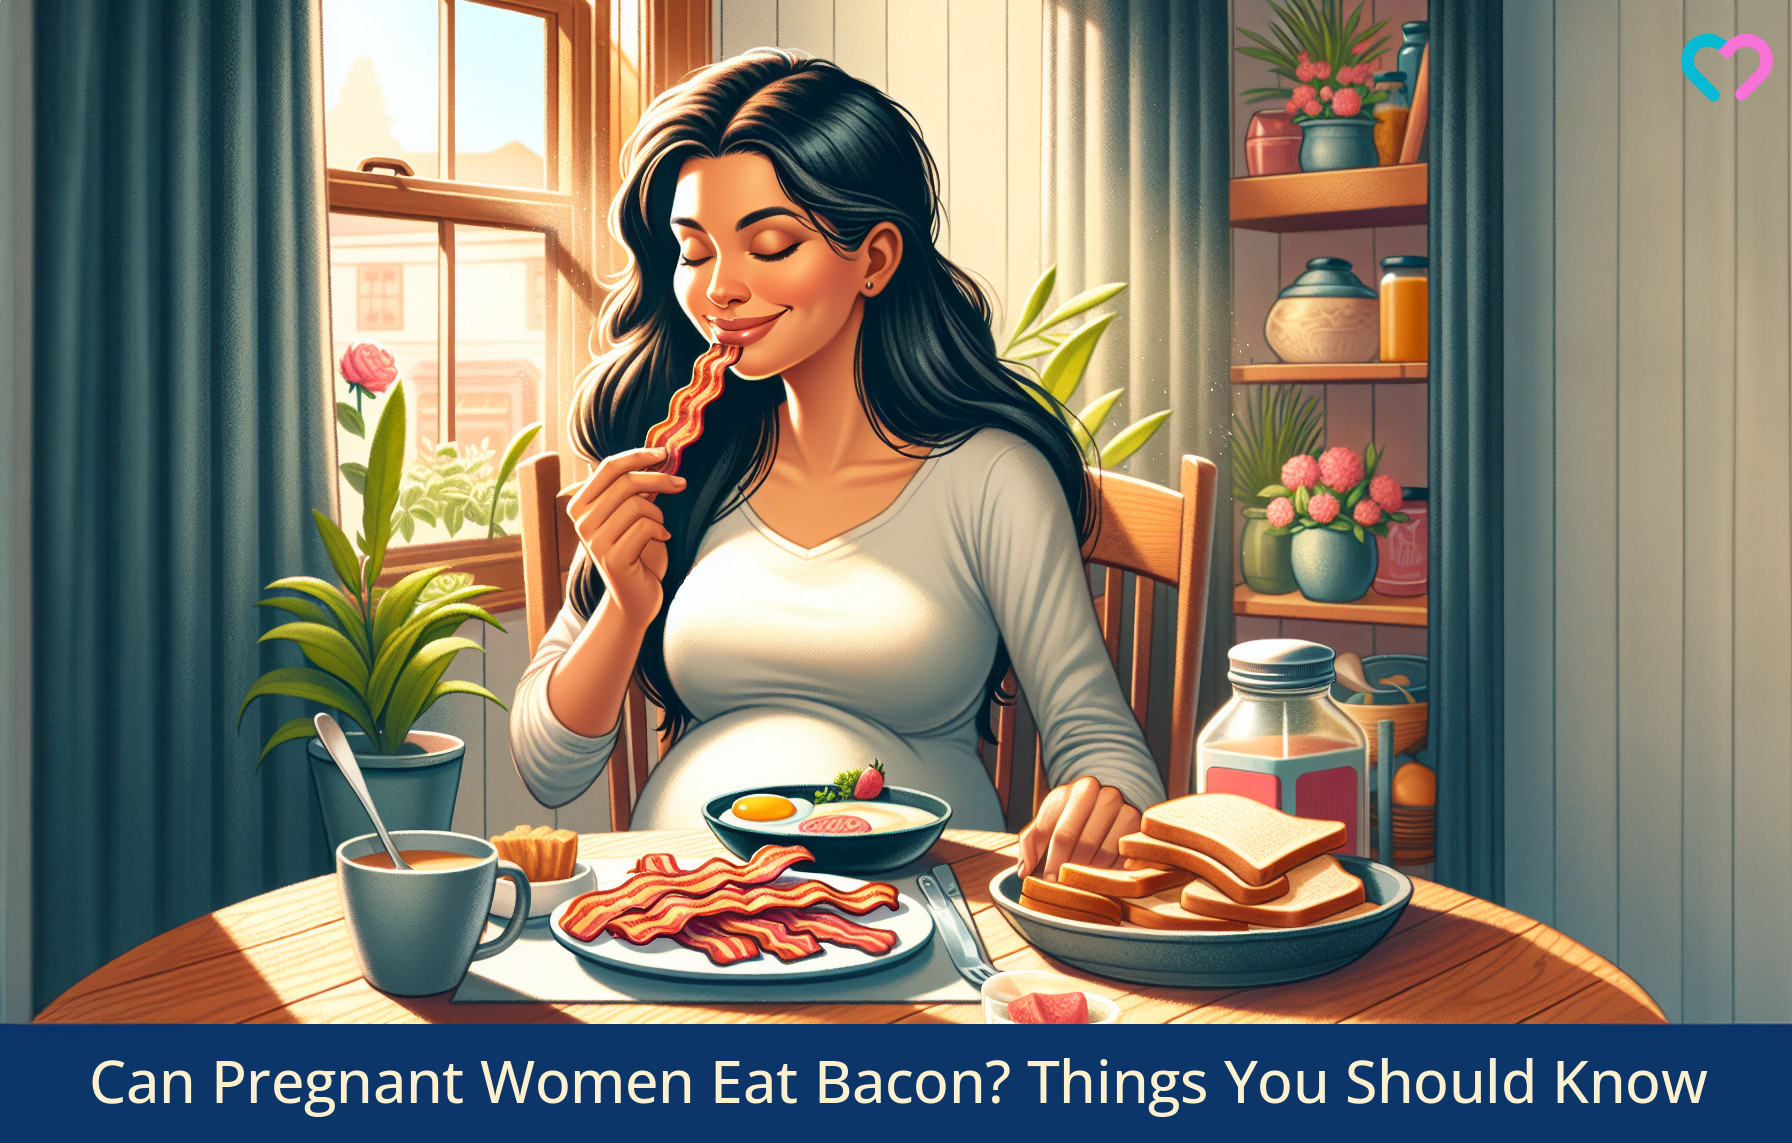 bacon during pregnancy_illustration